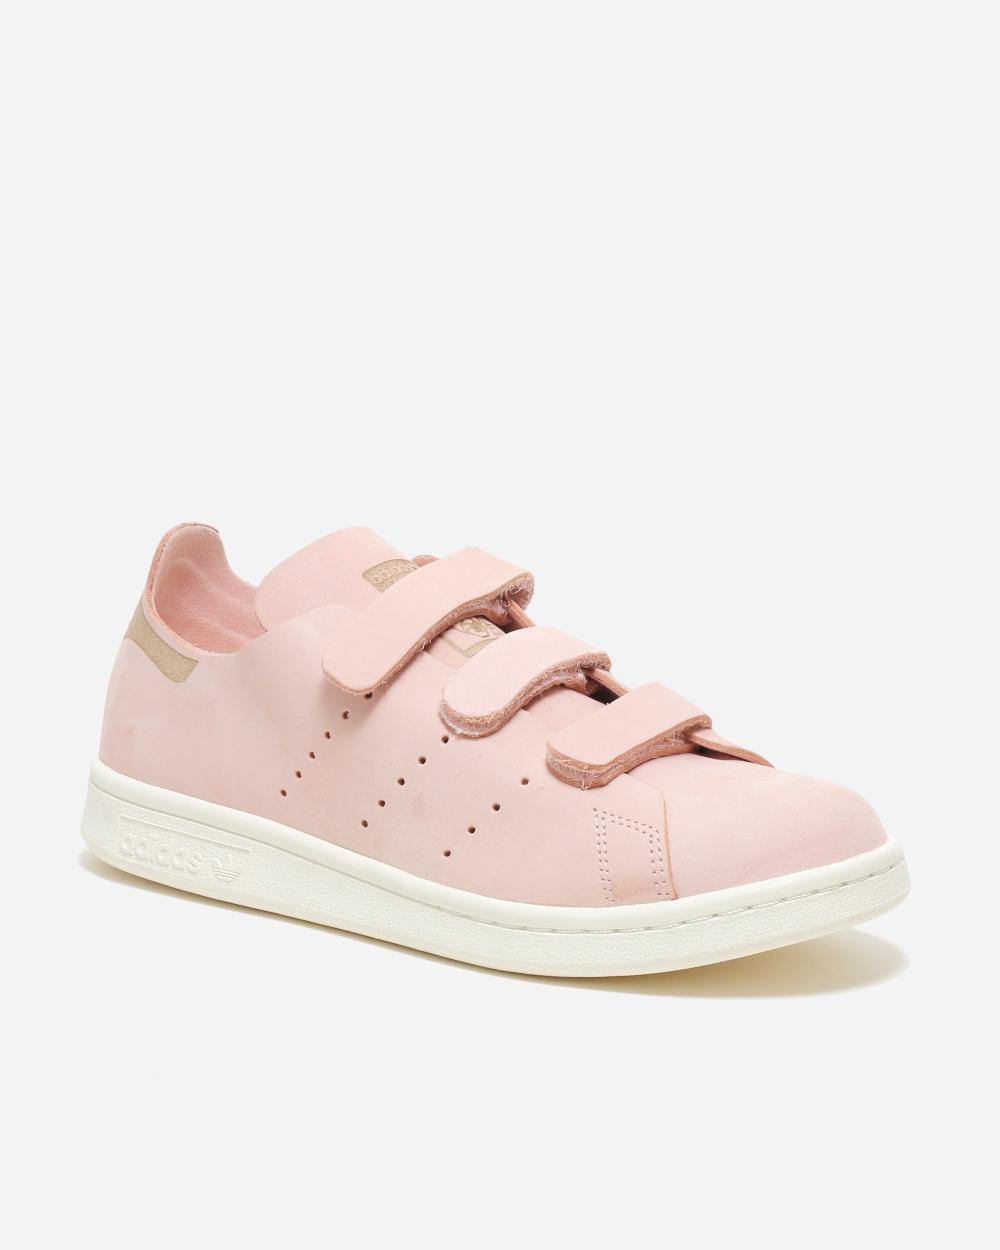 adidas-stansmith-pink1